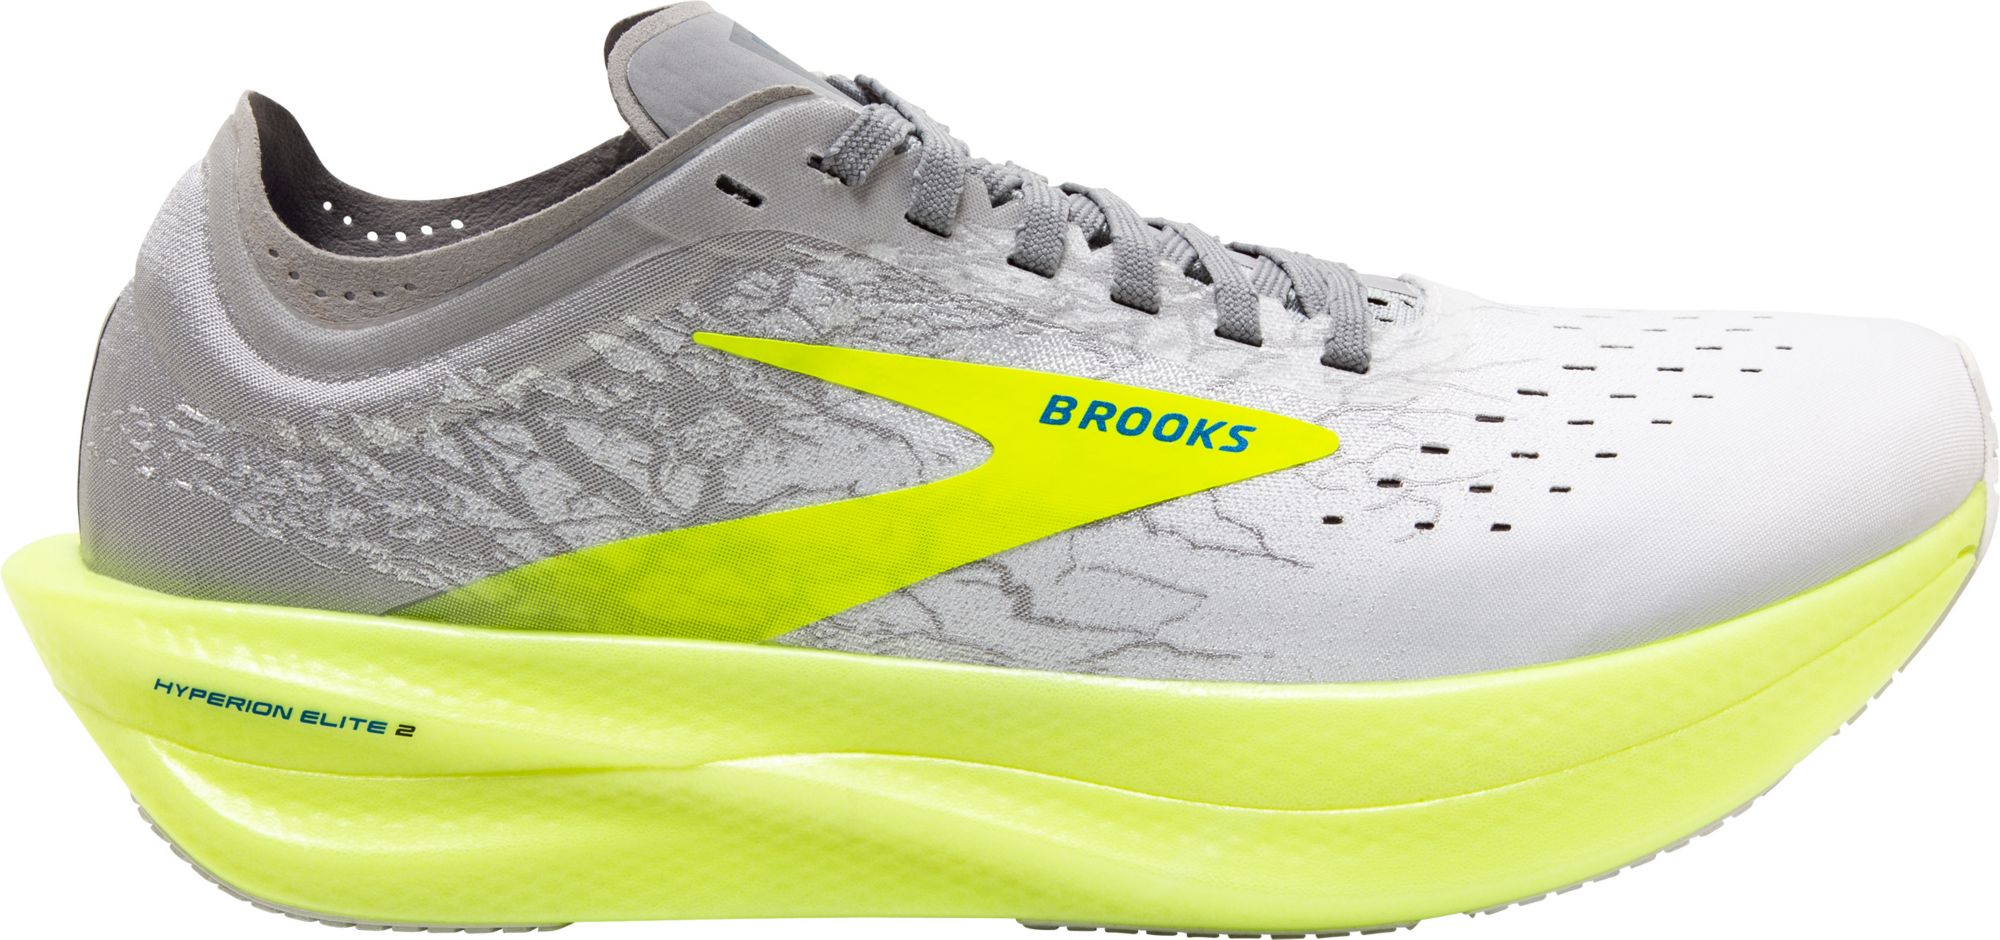 dicks sporting goods brooks sneakers